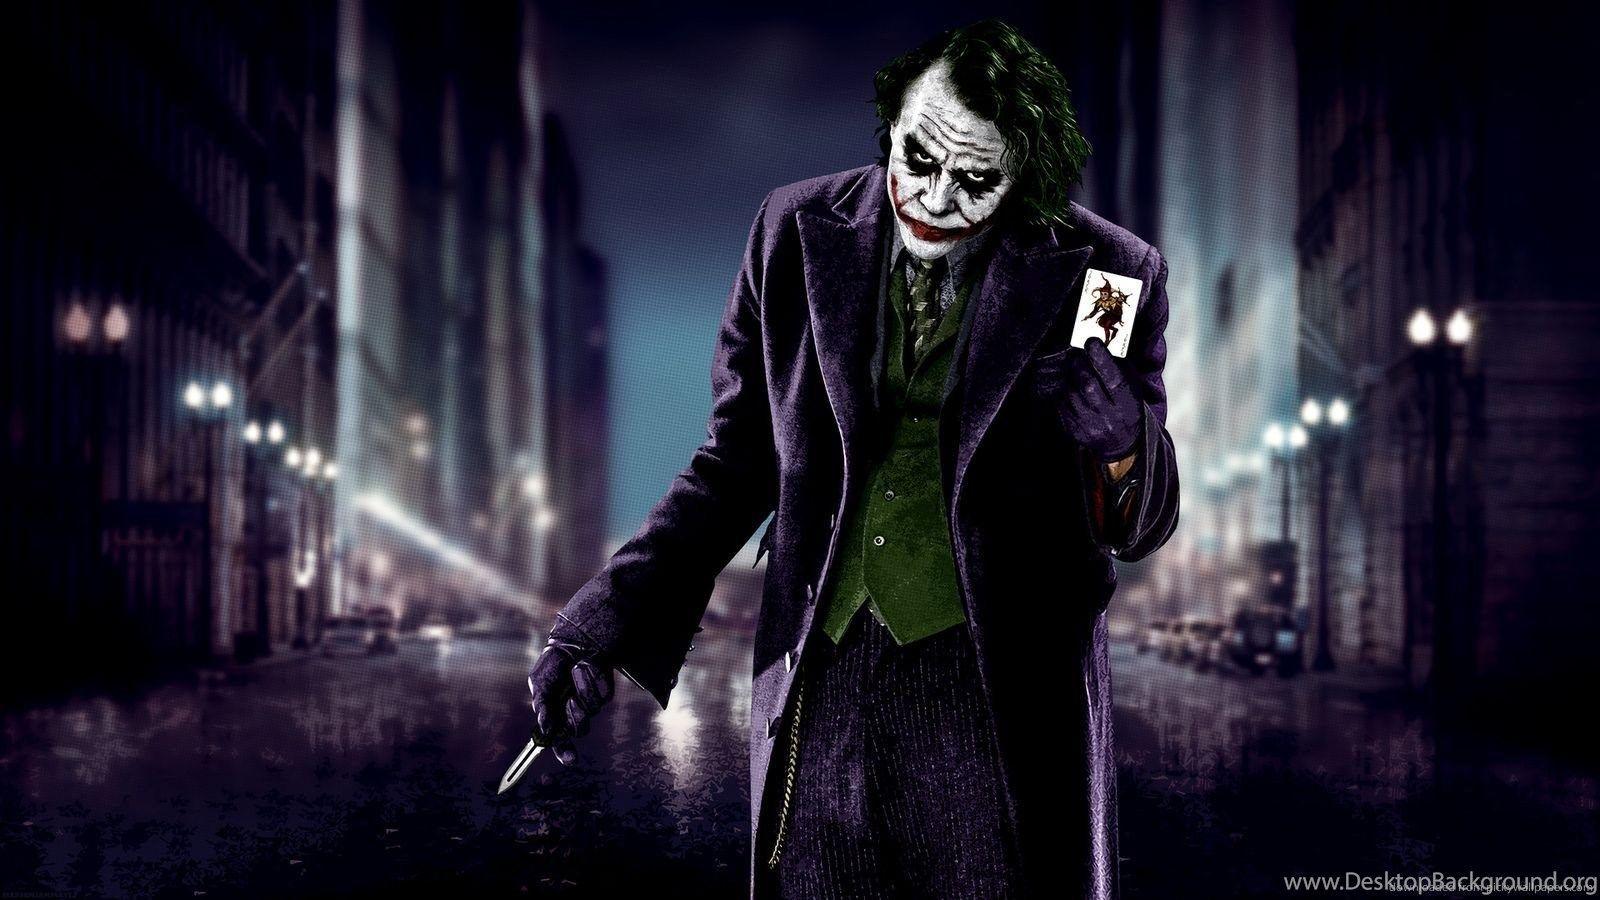 Download 1600x900 Joker Showing His Card Wallpaper Desktop Background